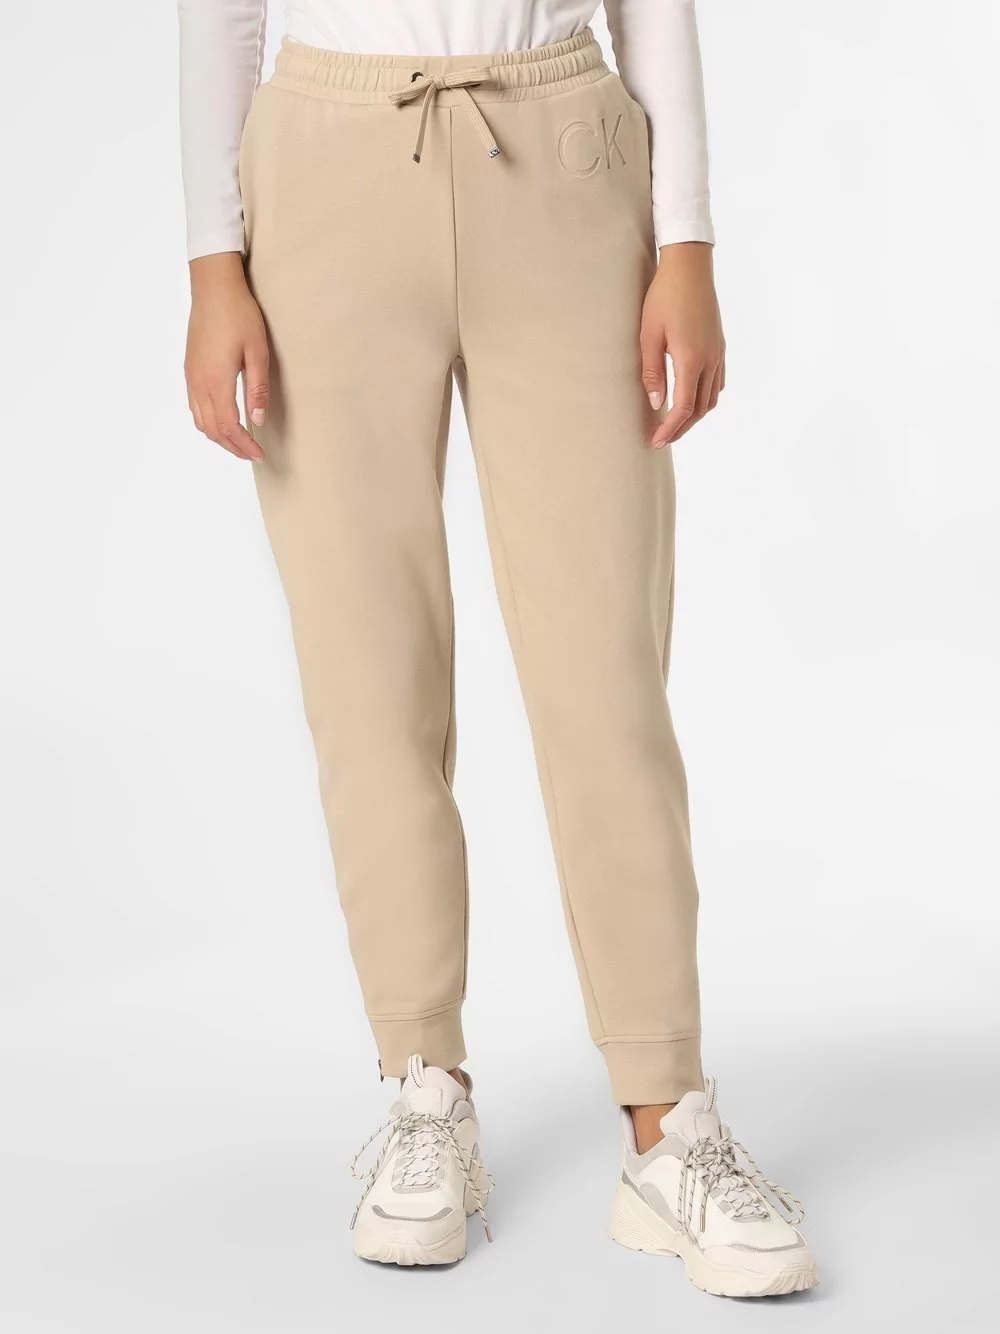 Calvin Klein Calvin Klein - Damskie spodnie dresowe, beżowy